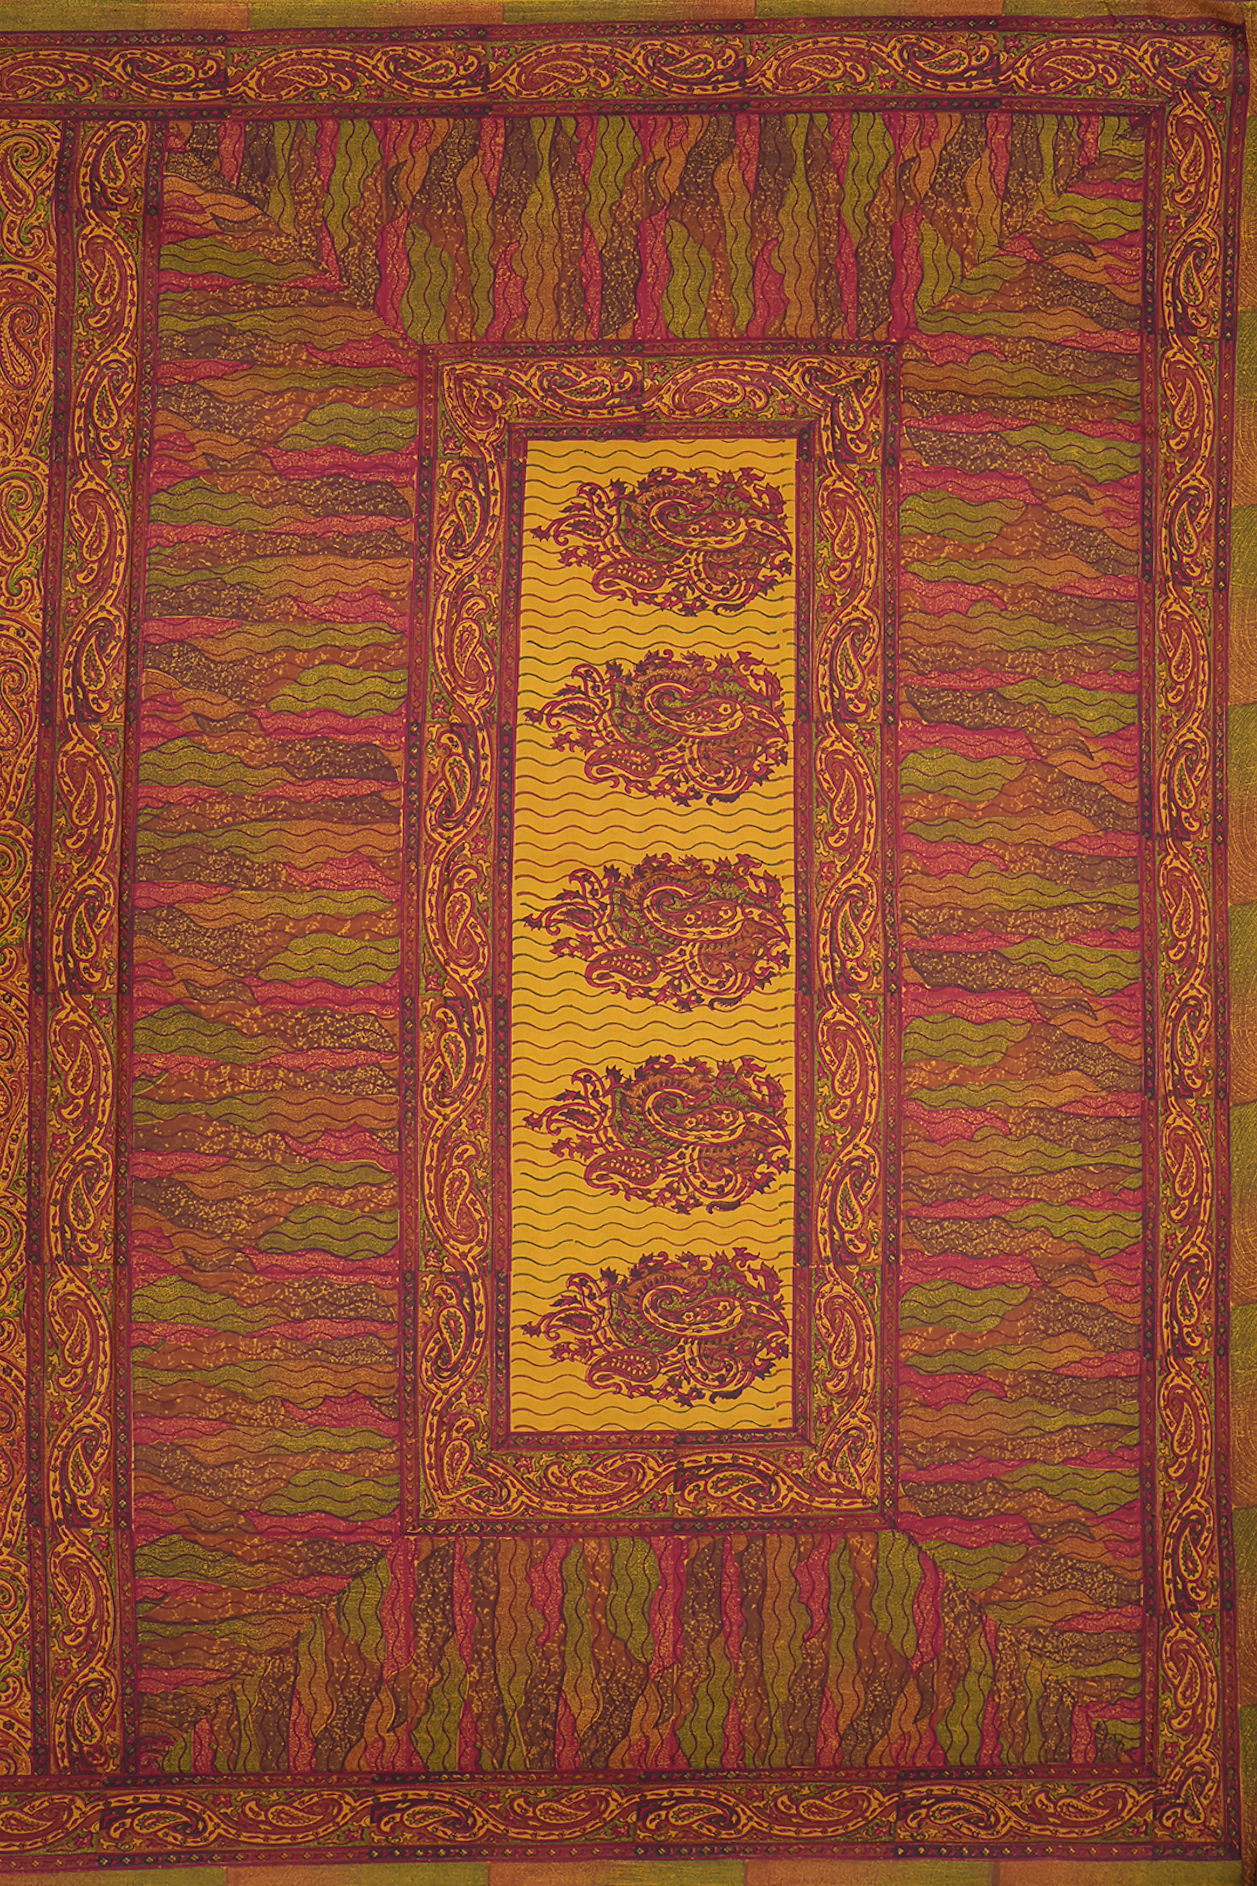 Allover Paisley Design Multicolor Printed Silk Saree